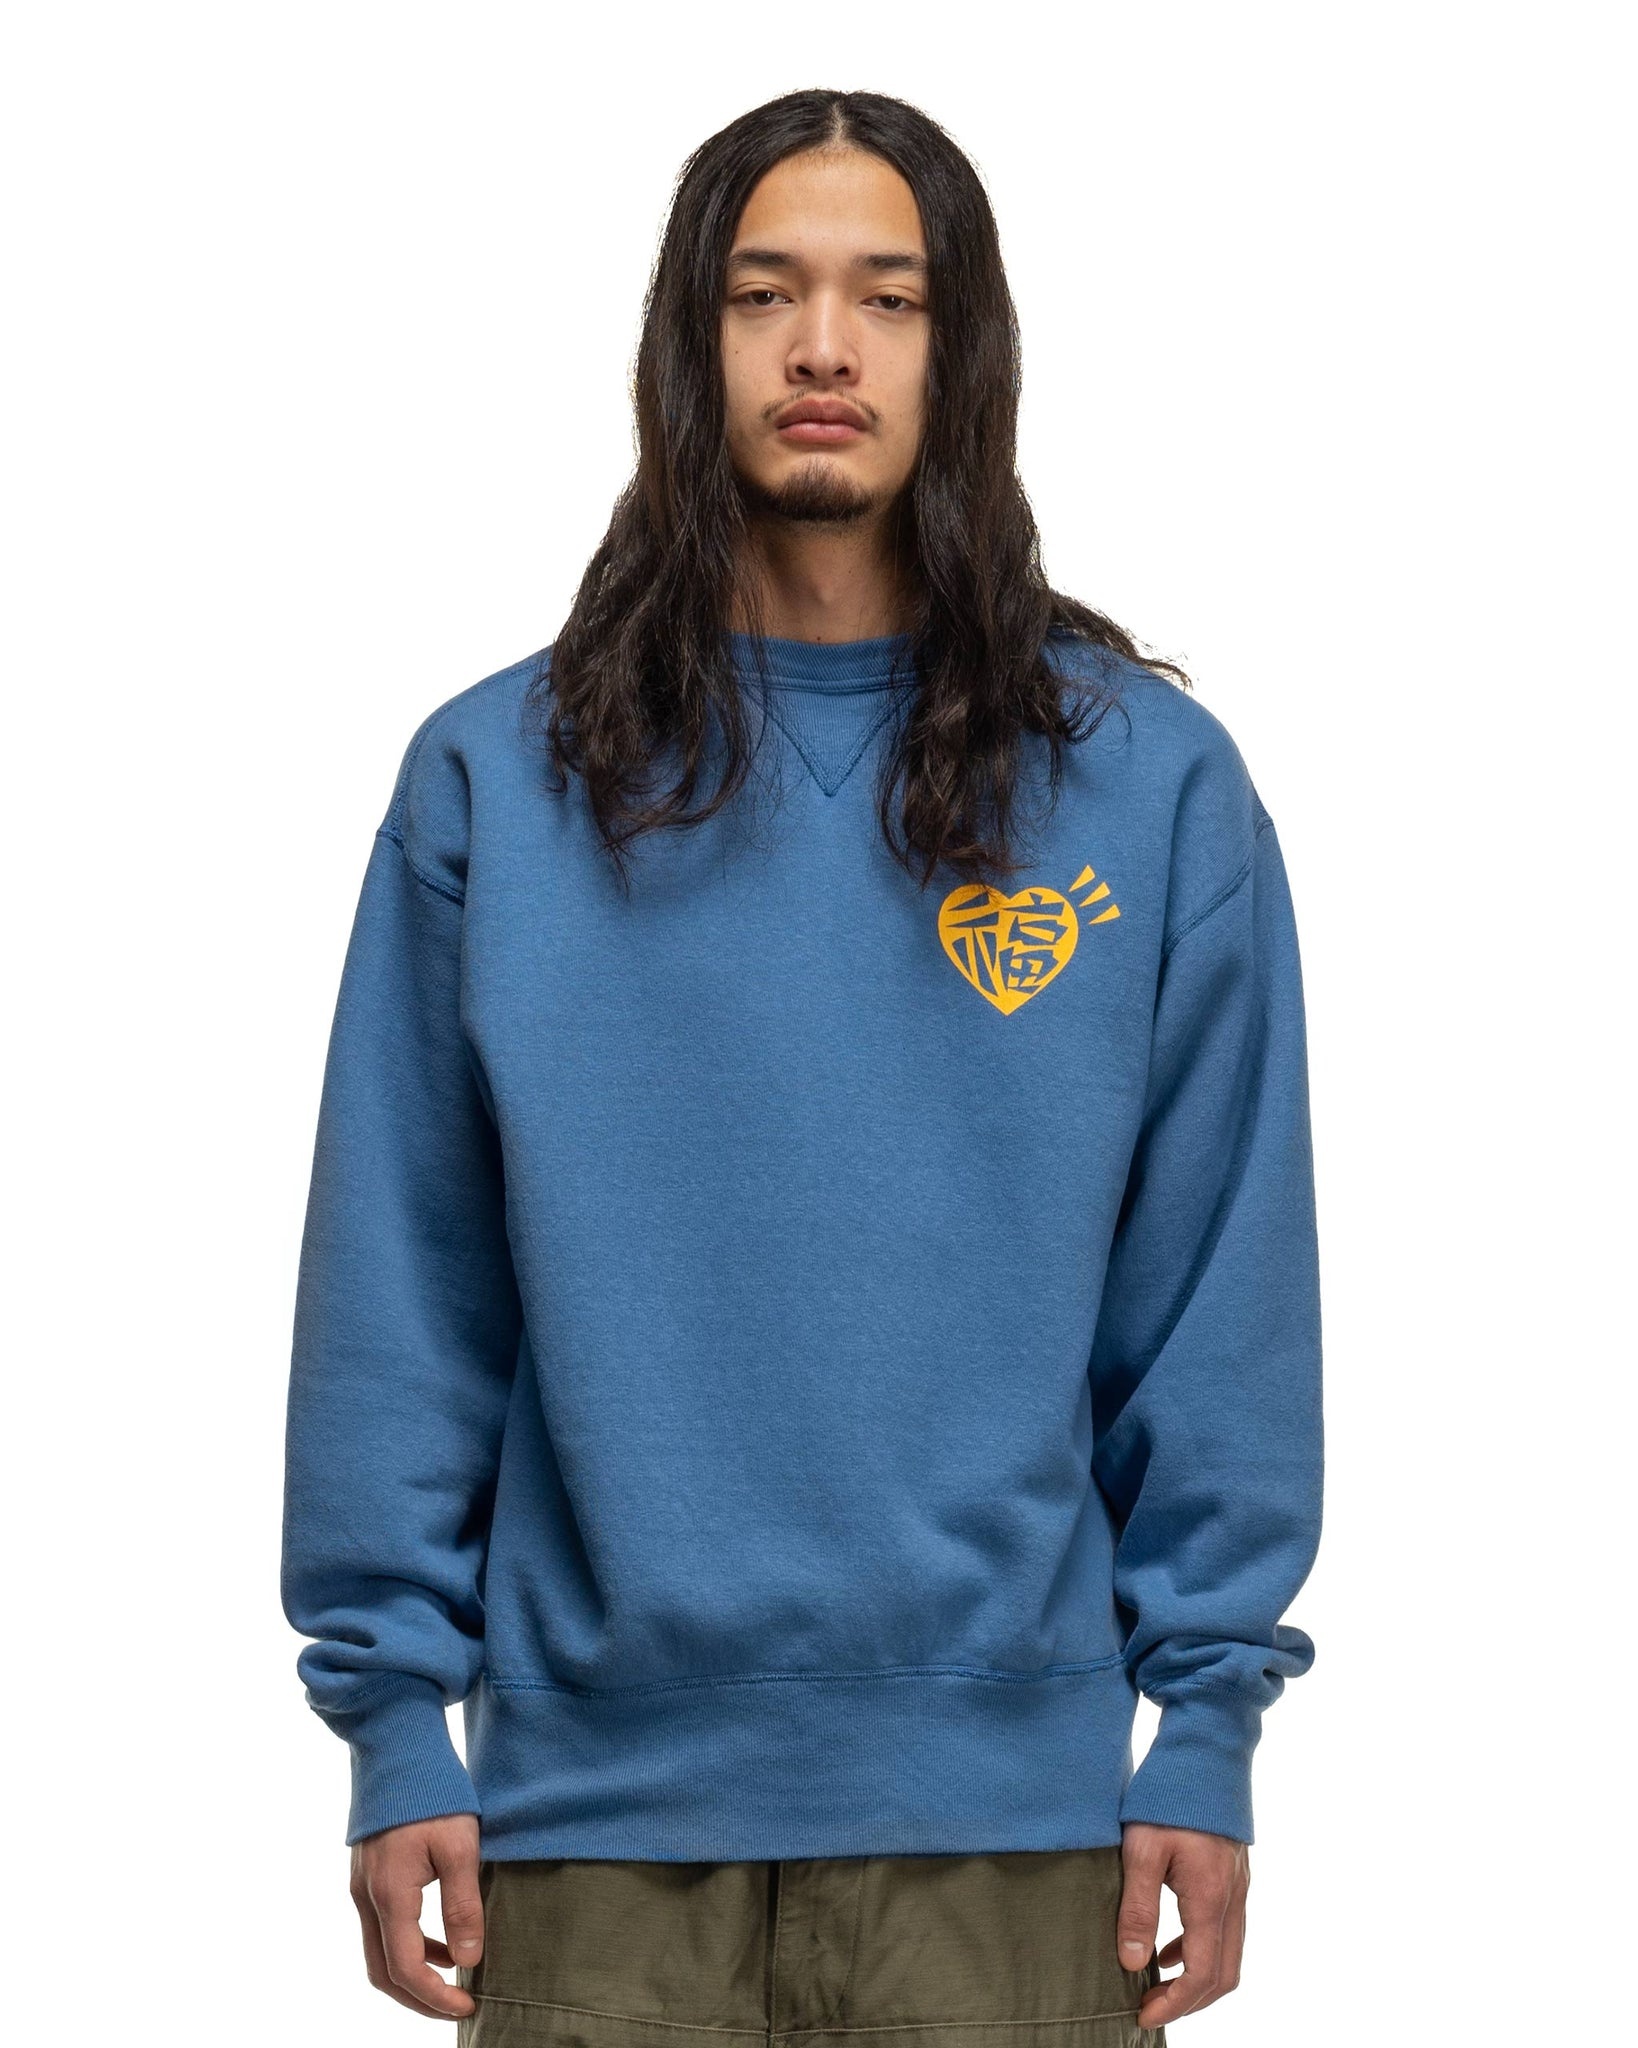 Dragon Sweatshirt #1 Navy - 4